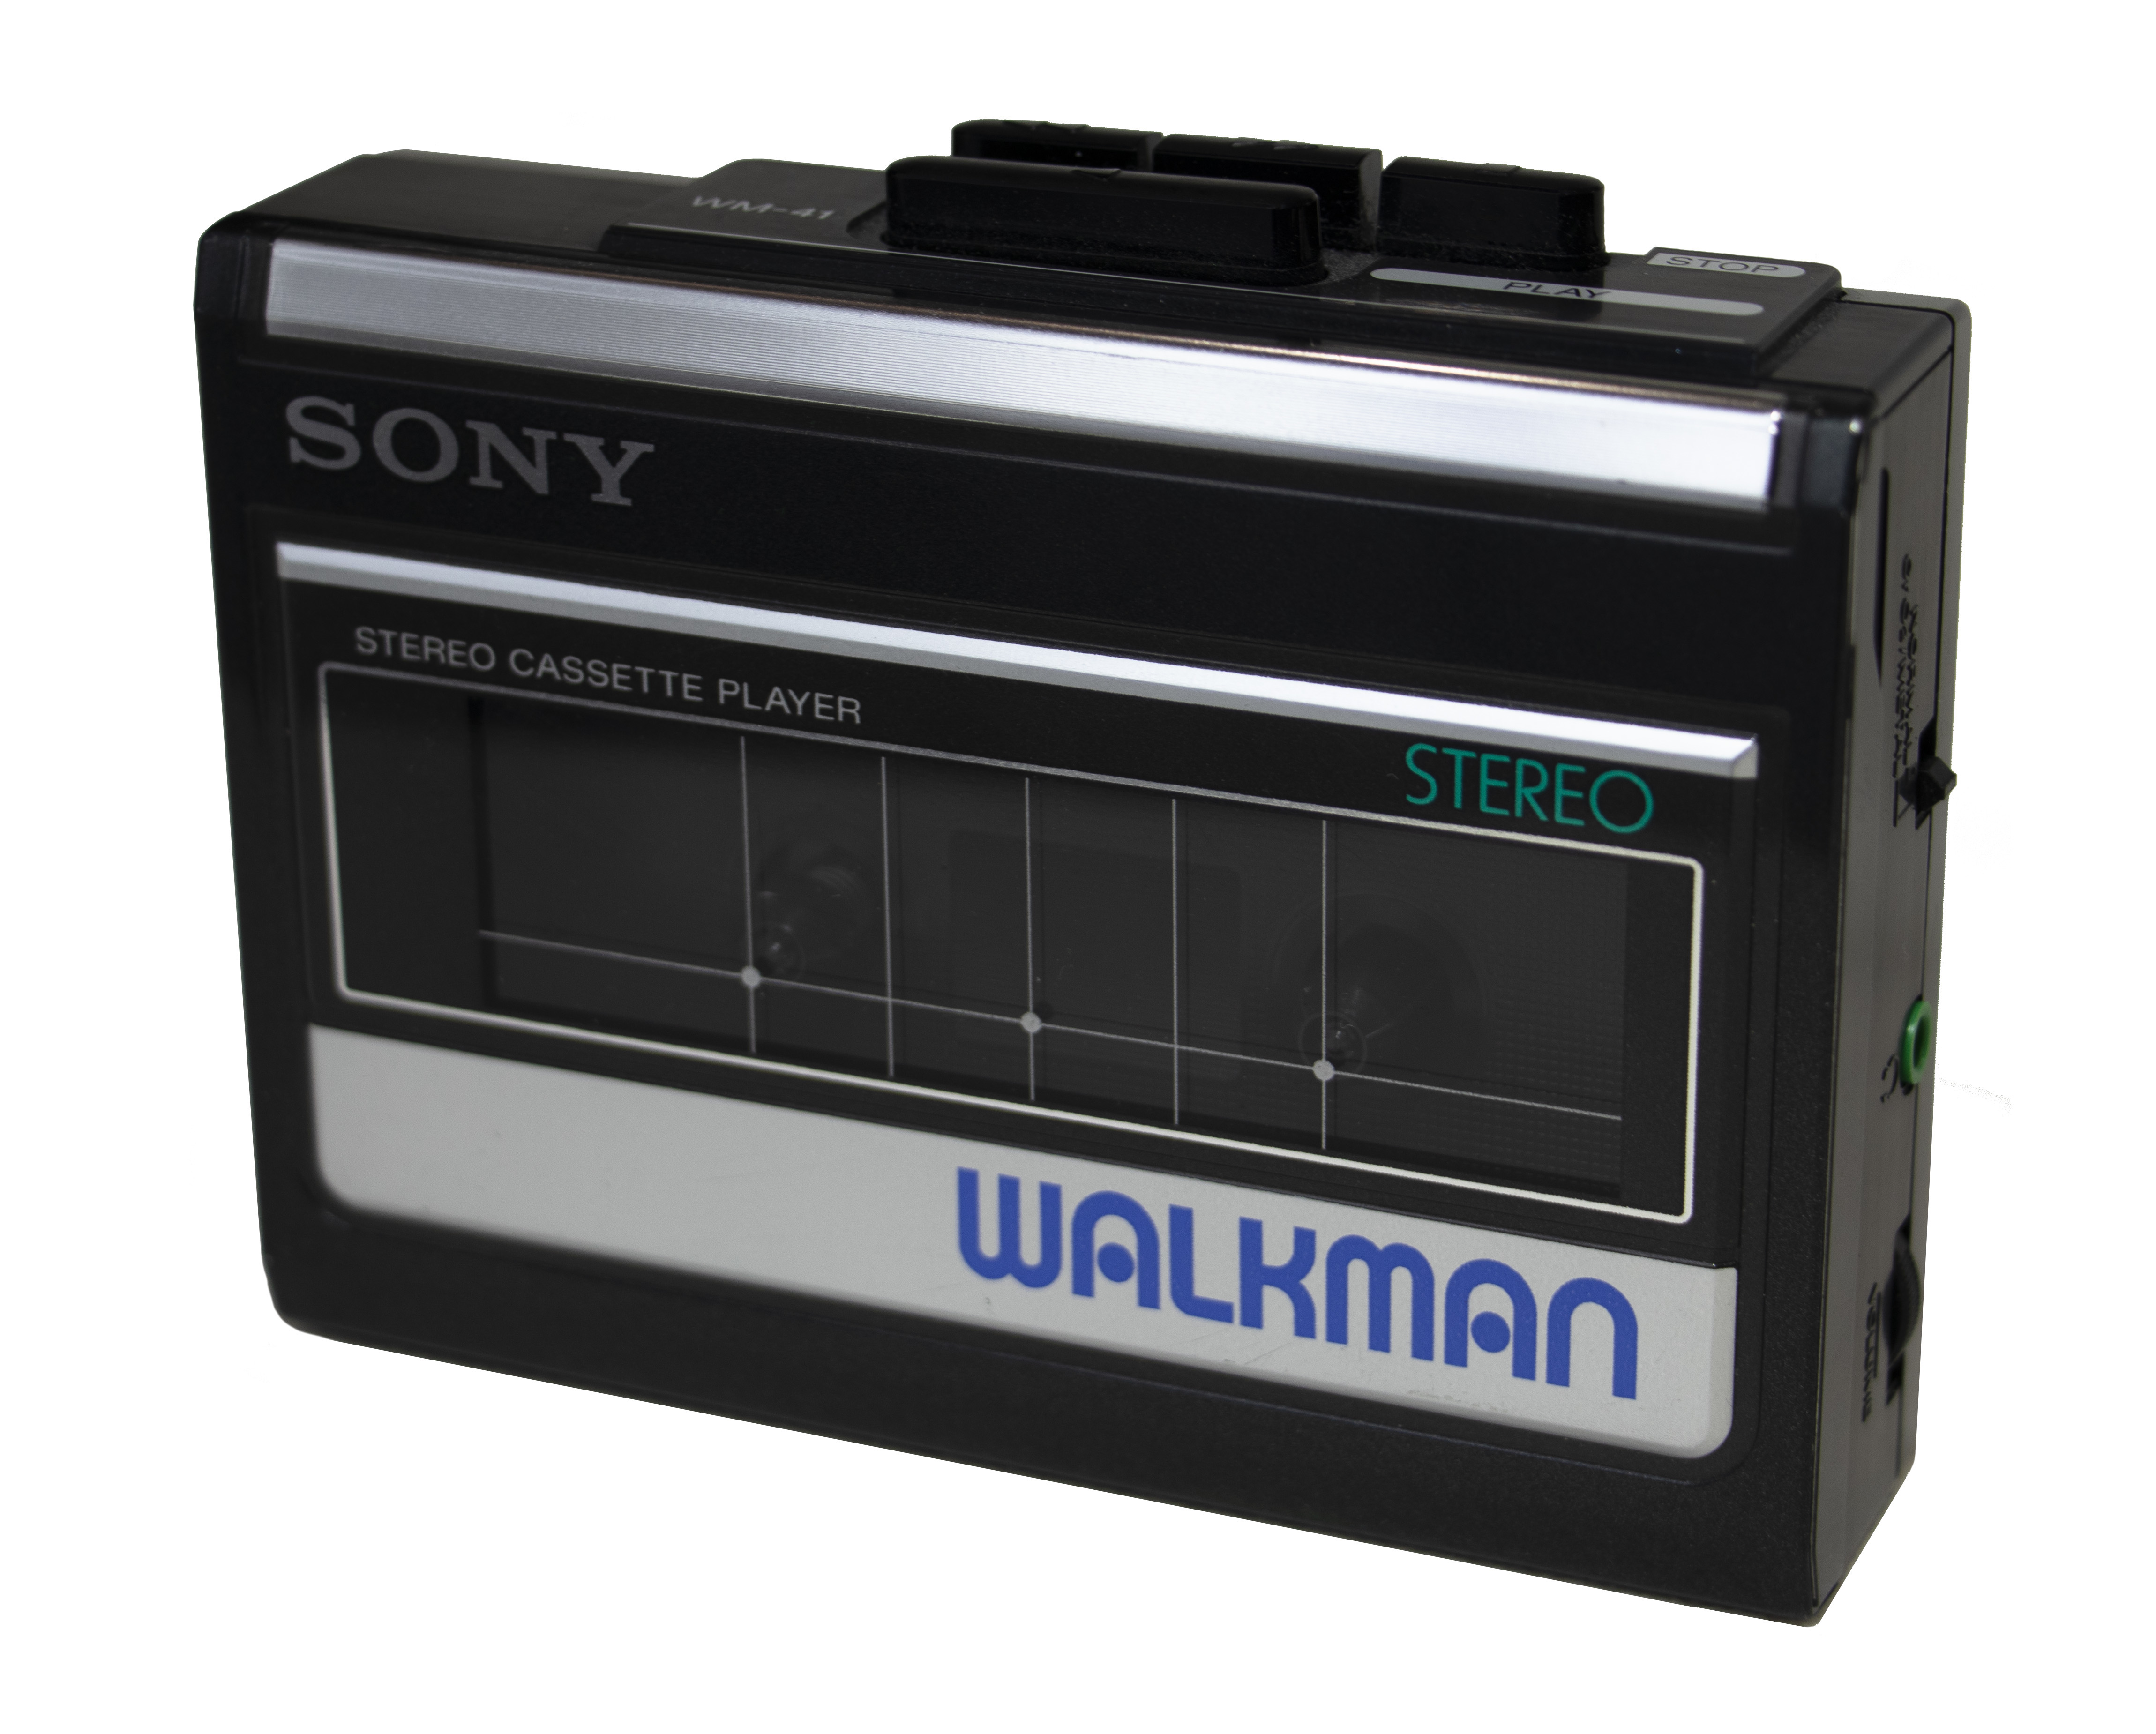 https://upload.wikimedia.org/wikipedia/commons/d/dd/Sony_Walkman_WM-41.jpg